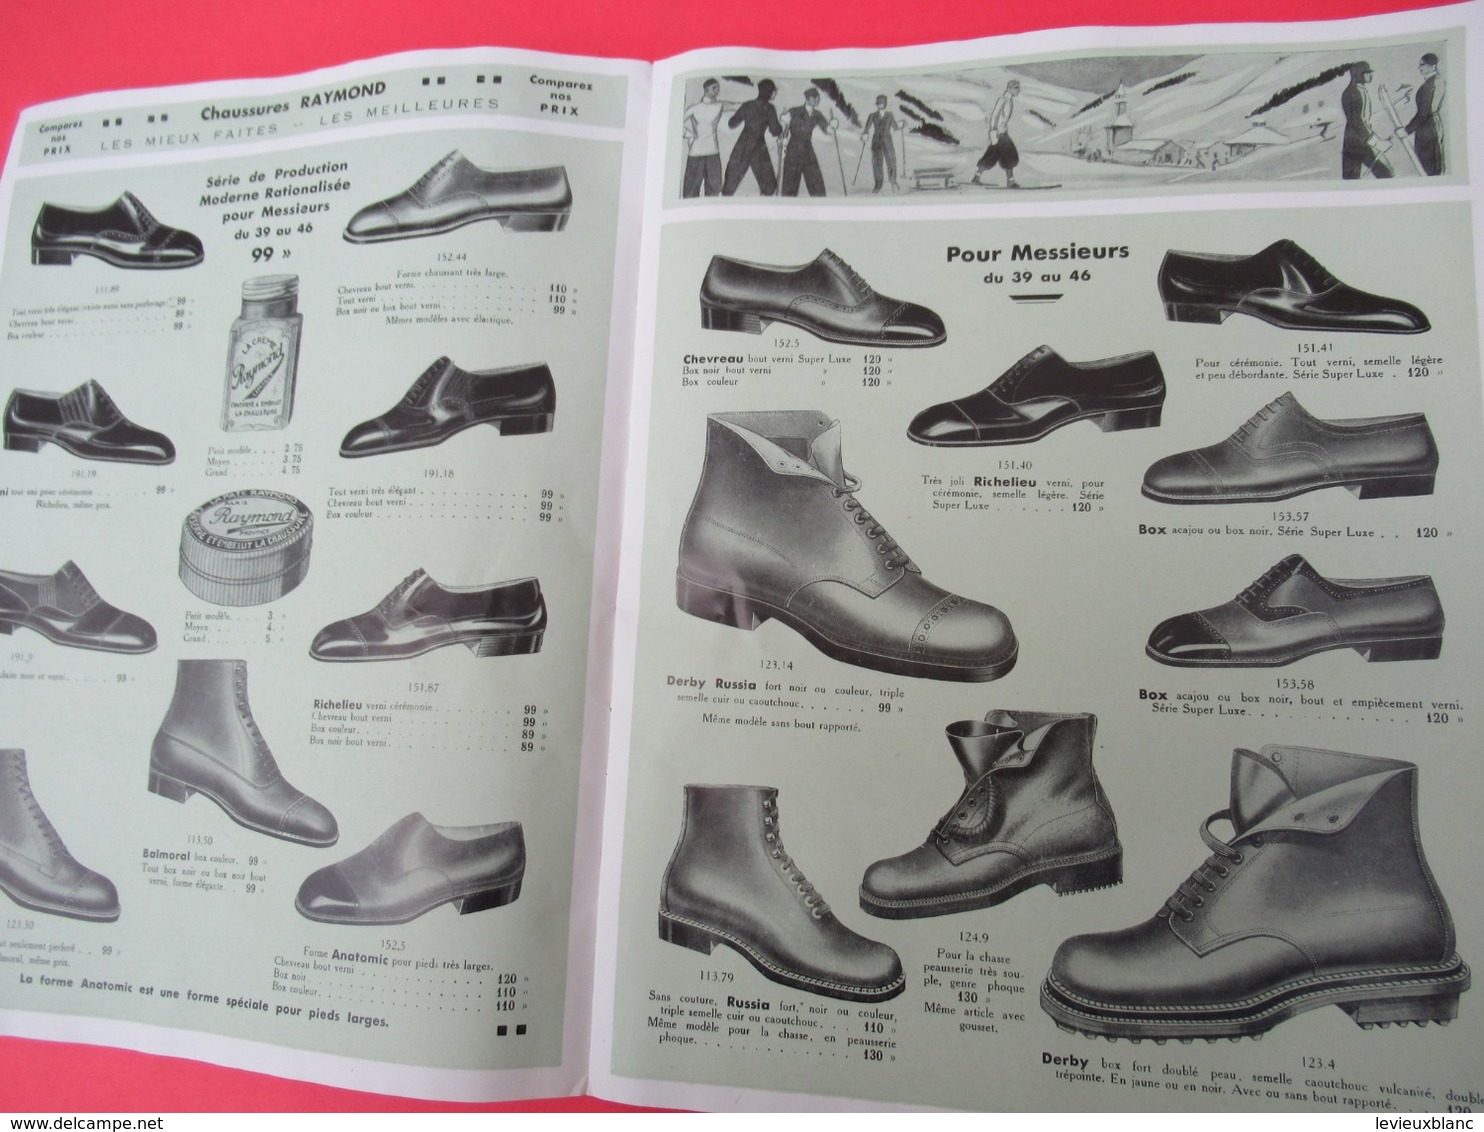 Catalogue-Tarif/ Habillement/ Chaussures/ Chaussures RAYMOND/Limoges - Poitiers/Chausse le Monde entier/1932   CAT254